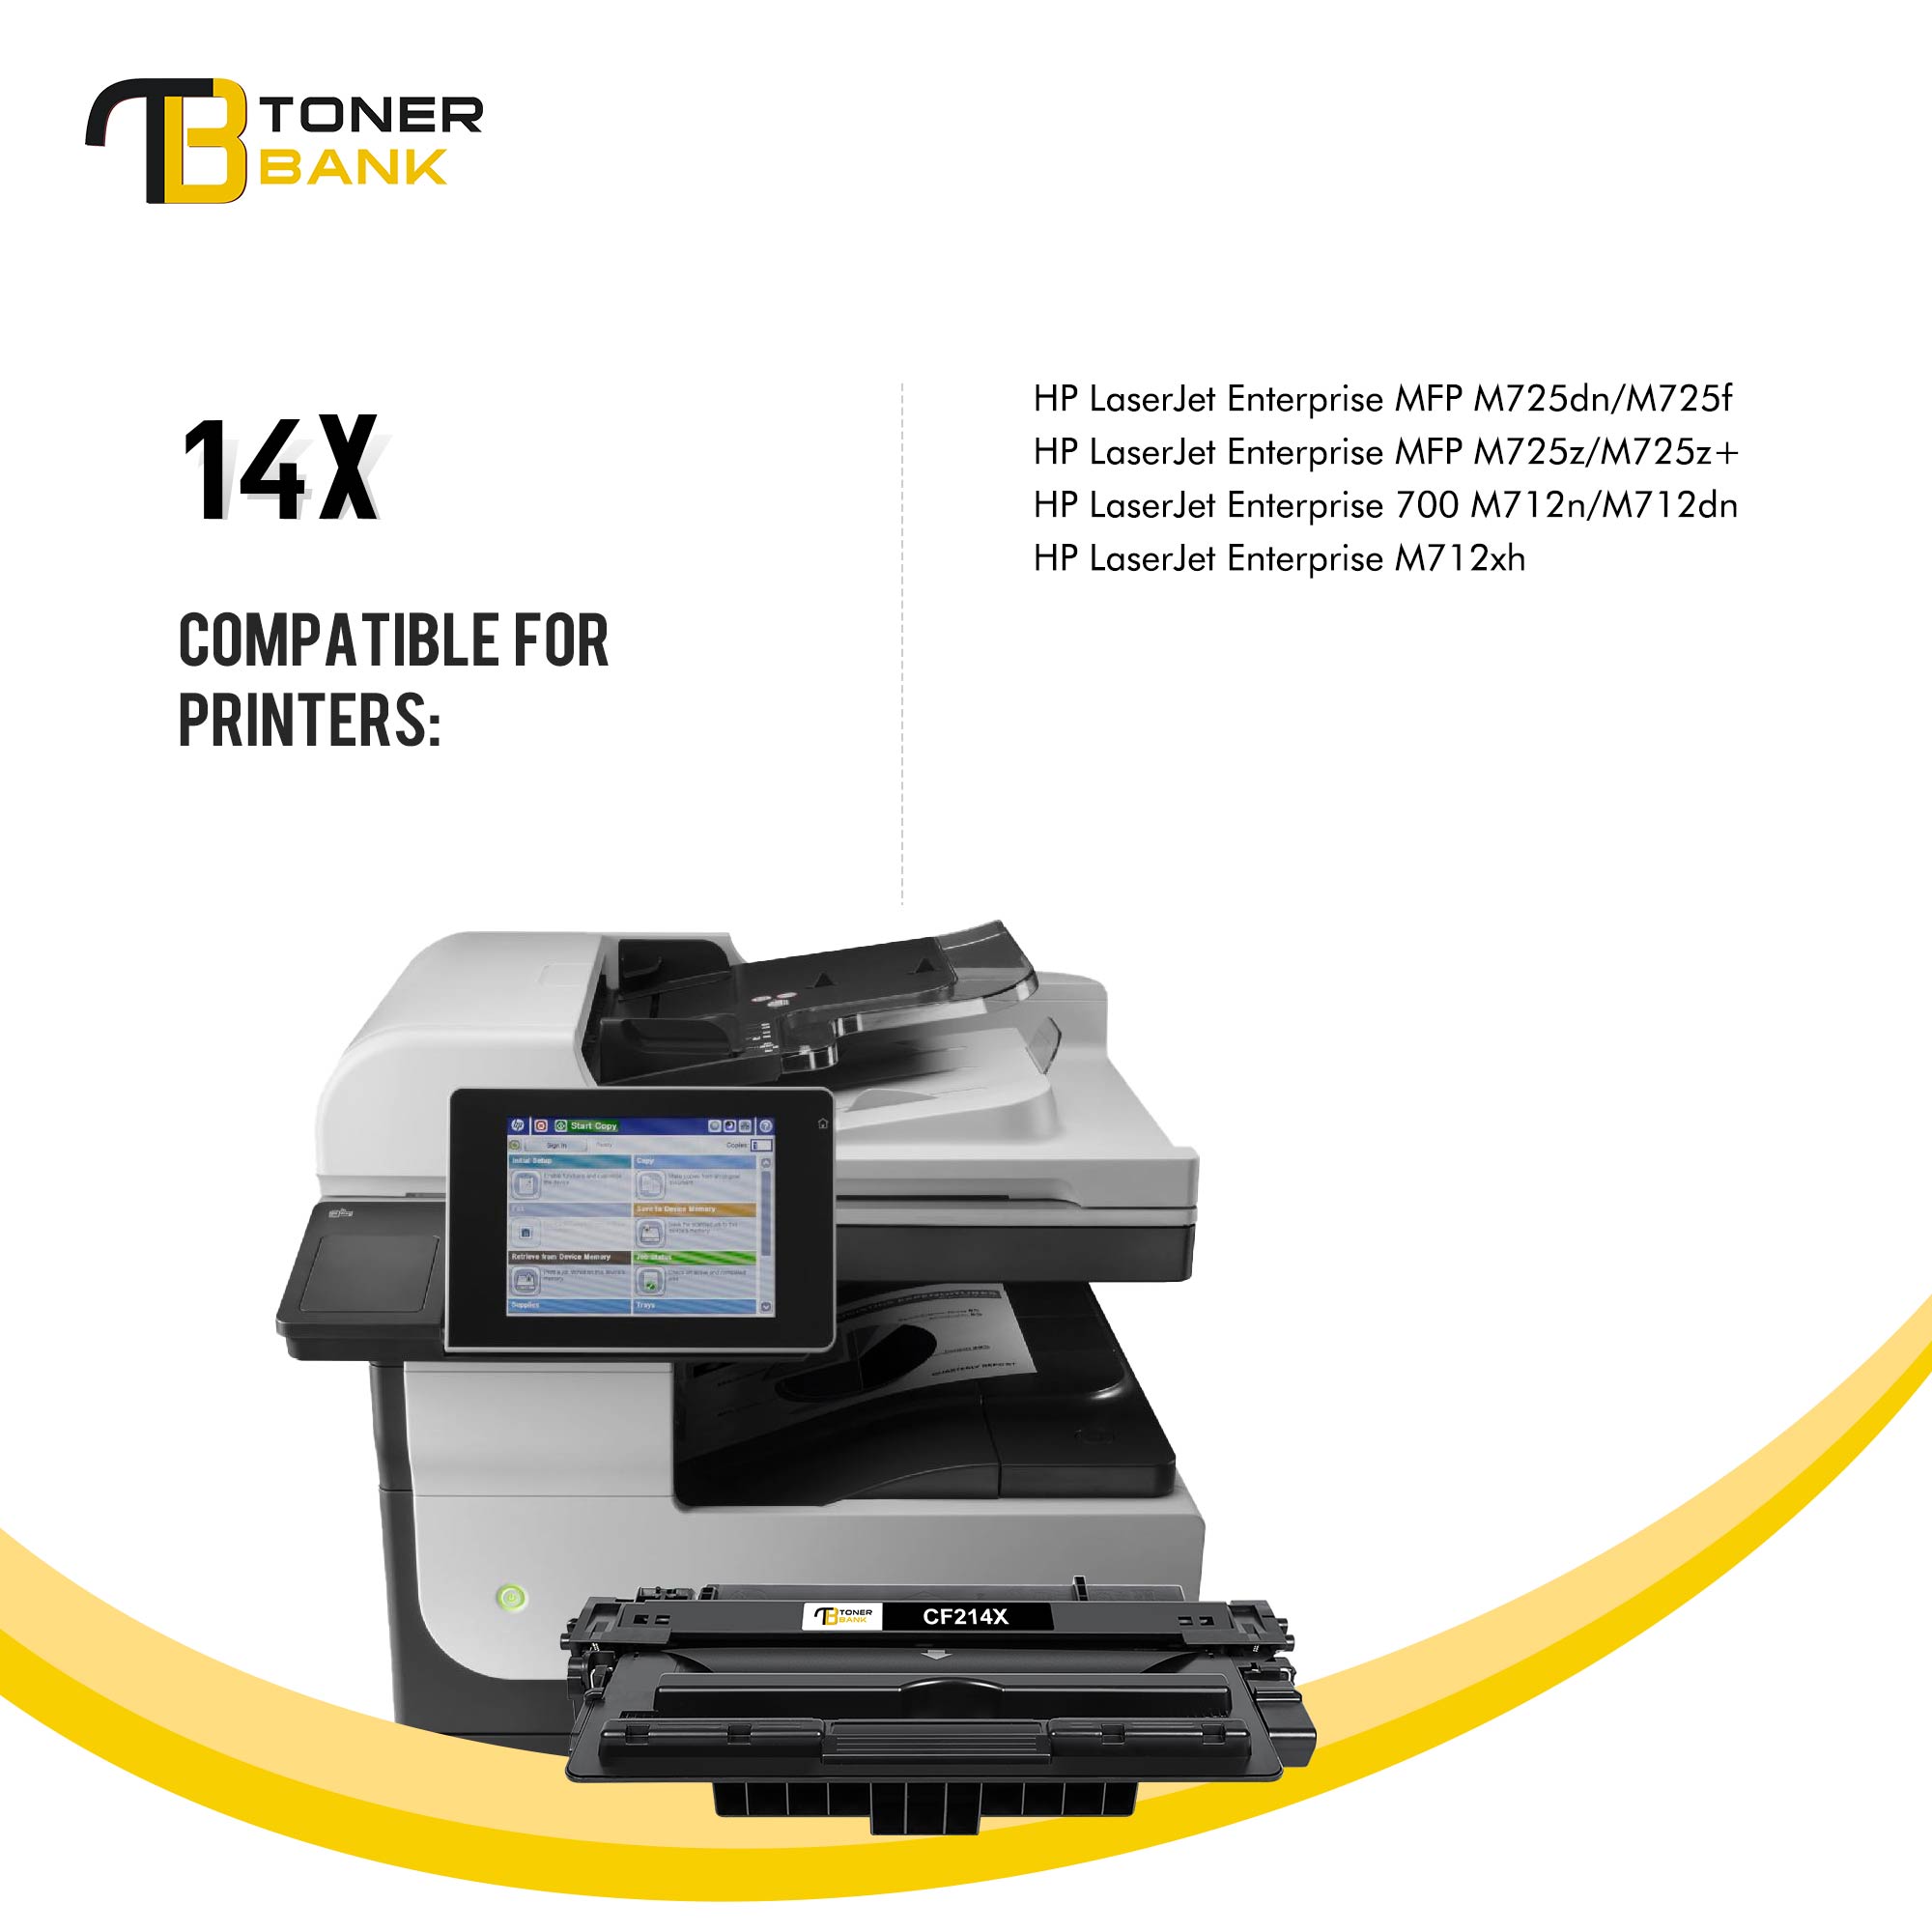 Toner Bank 4-Pack Compatible Toner Replacement Cartridge for HP CF214X LaserJet Enterprise MFP-M725dn M725f M725z+ M712n M712dn M712xh Printer Ink Black - image 2 of 7